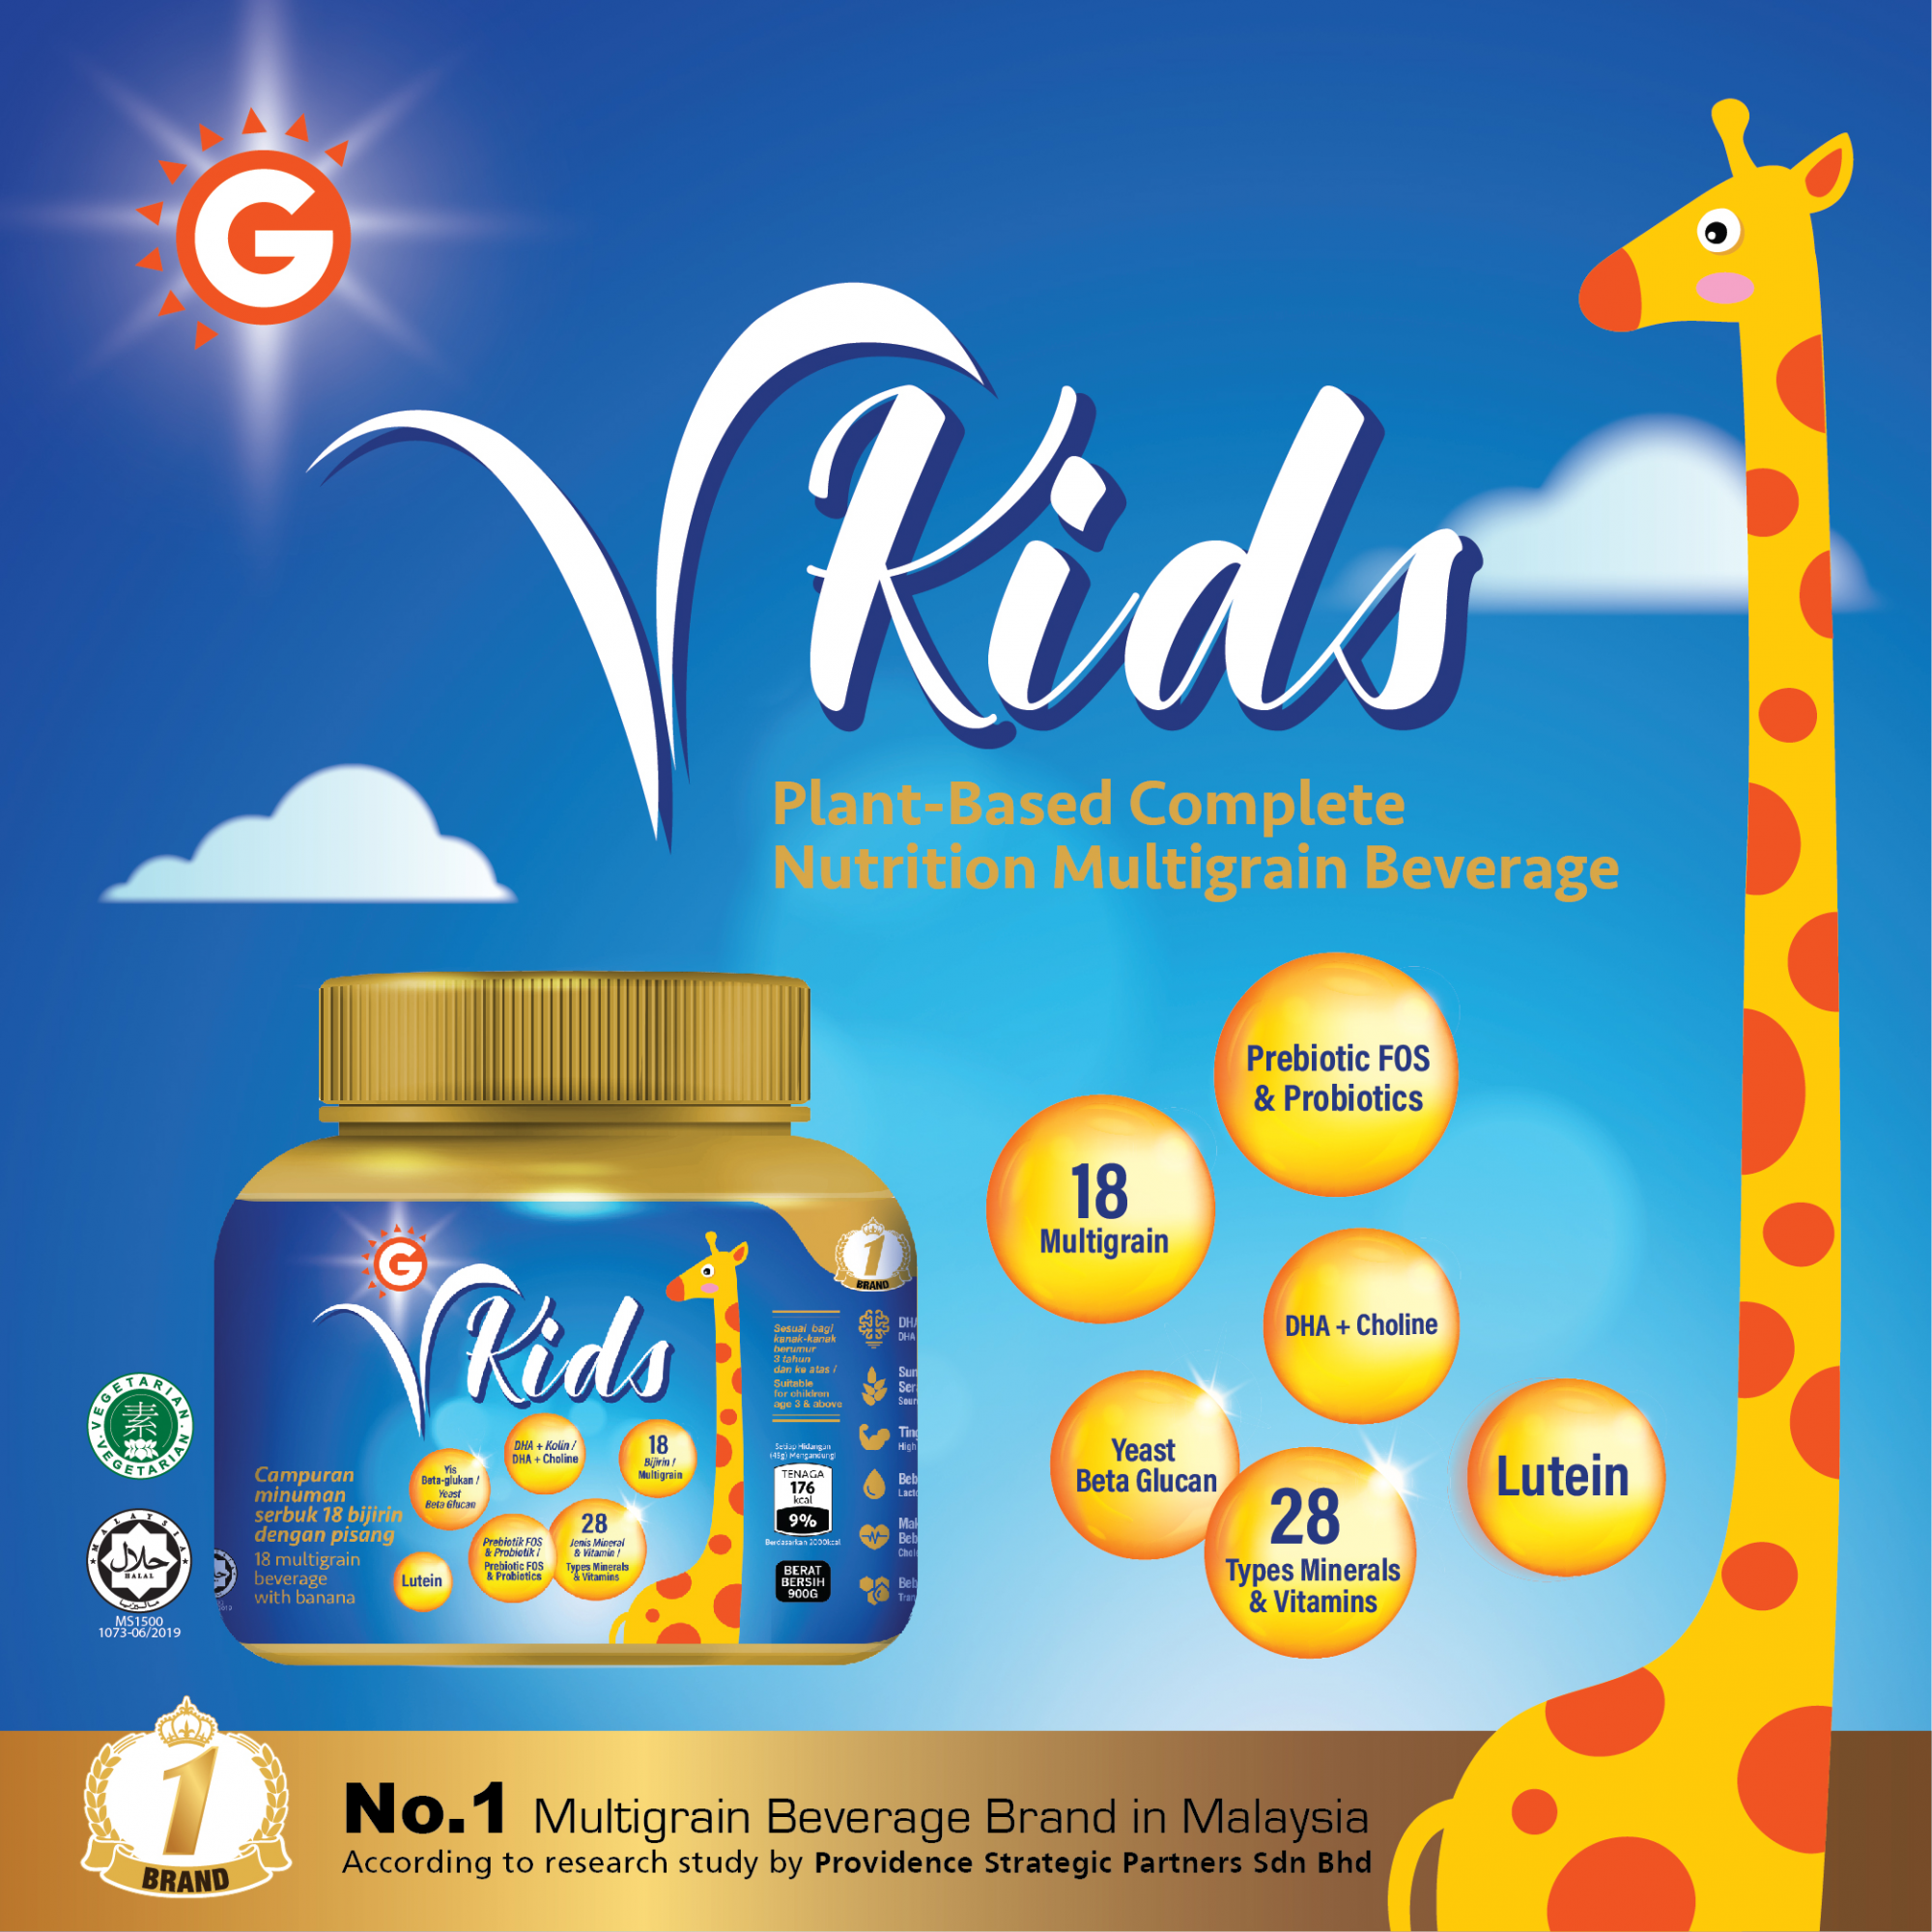 VKids - The First Plant-Based Complete Nutrition Multigrain Beverage For Kids